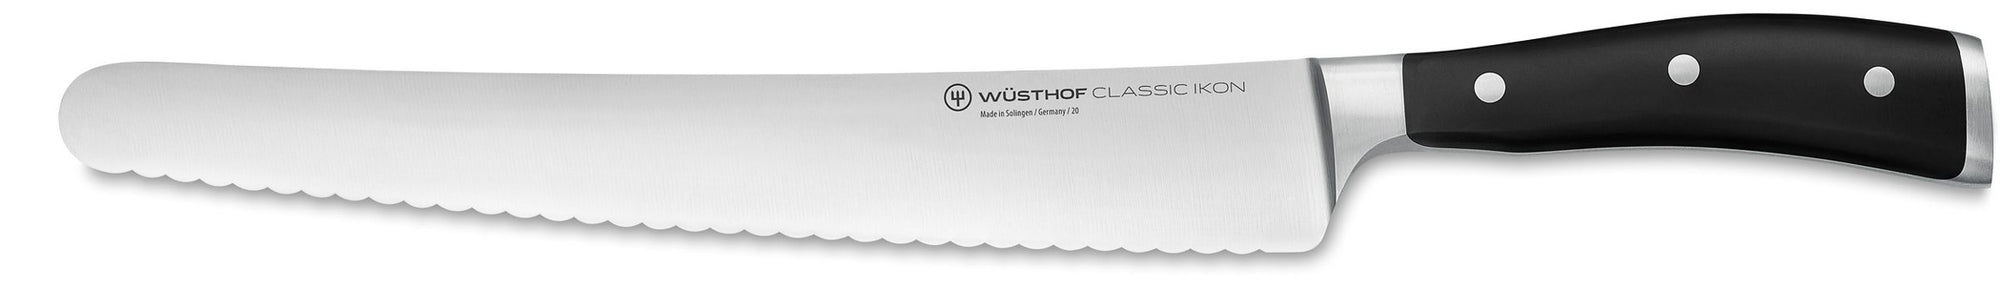 Wusthof Classic IKON Super Slicer, 10-inch (26cm), Wavy Edge (serrated) - 4516 Canada